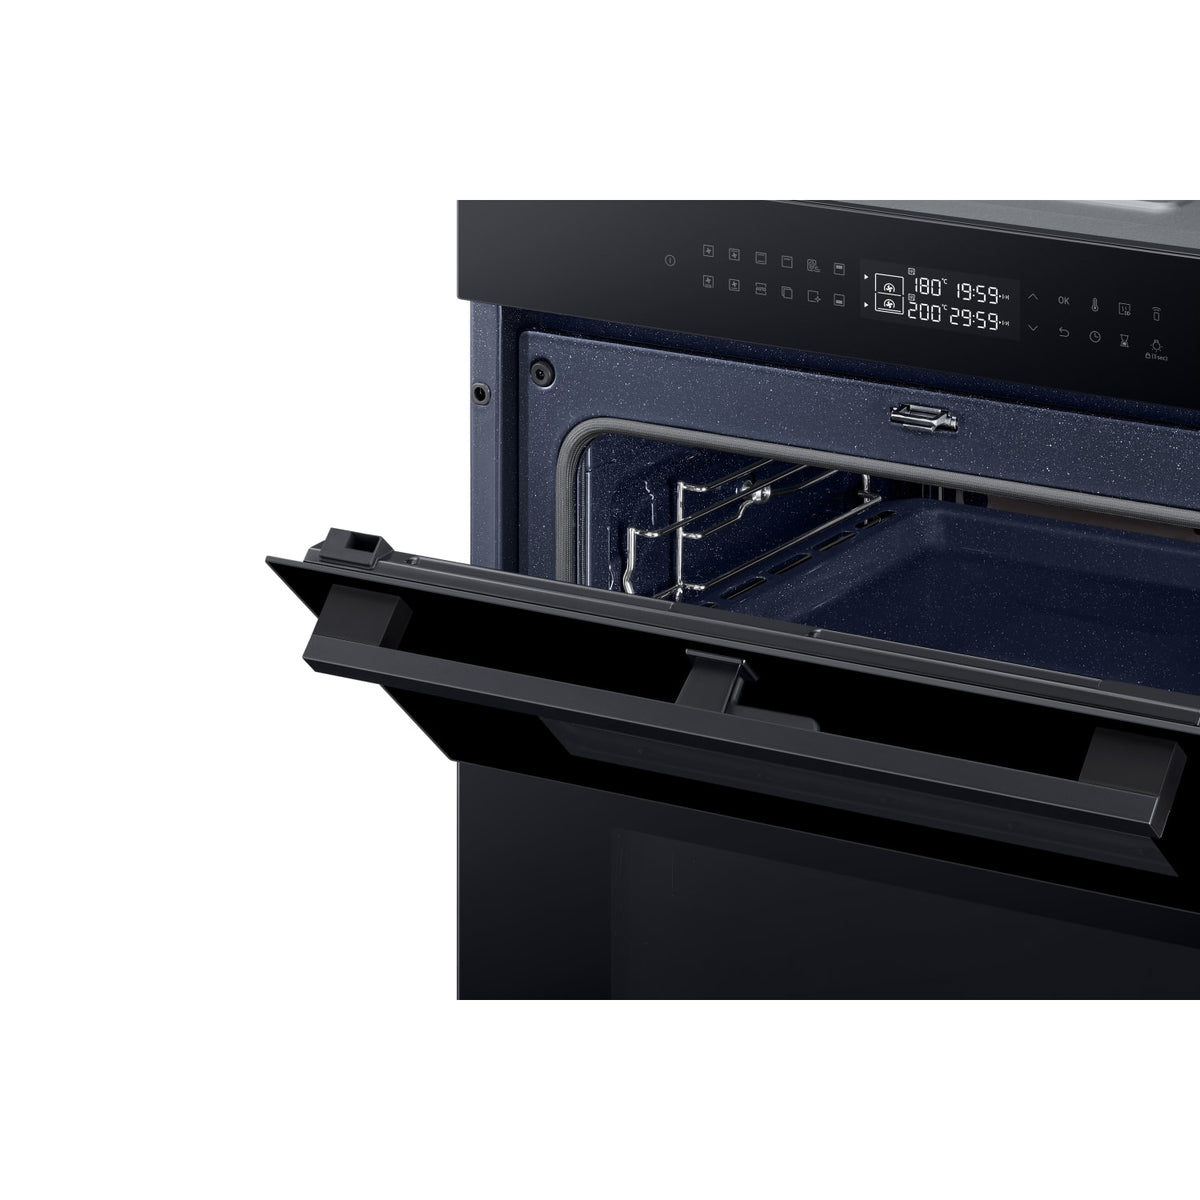 Samsung Series 4 76L Electric Smart Oven with Dual Cook - Black | NV7B4355VAK/U4 (7652107190460)